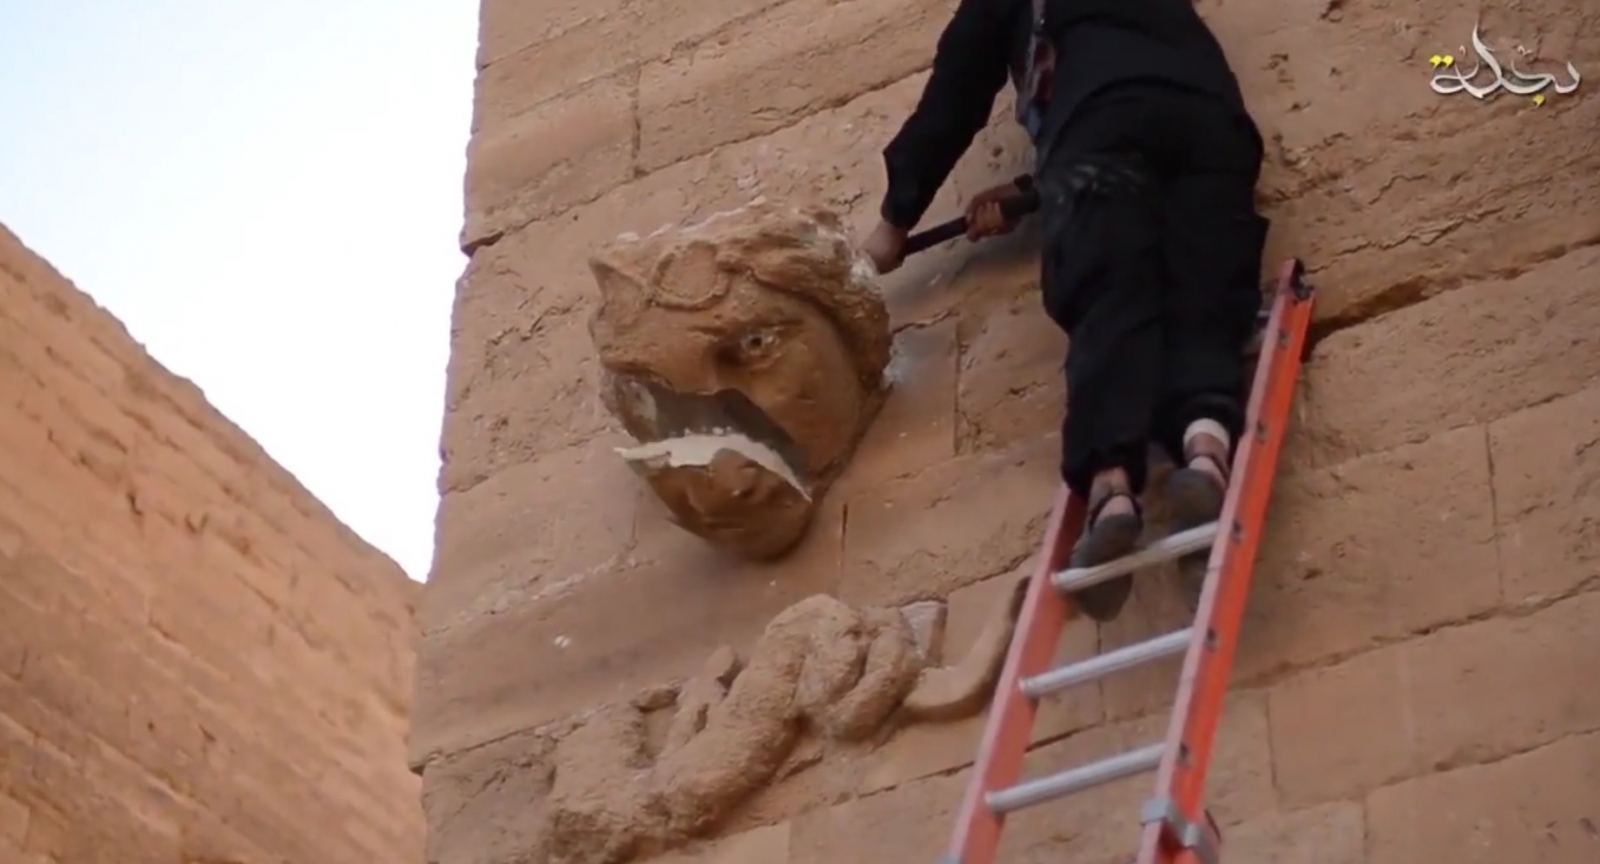 UNESCO Hatra Isis destroys artefacts